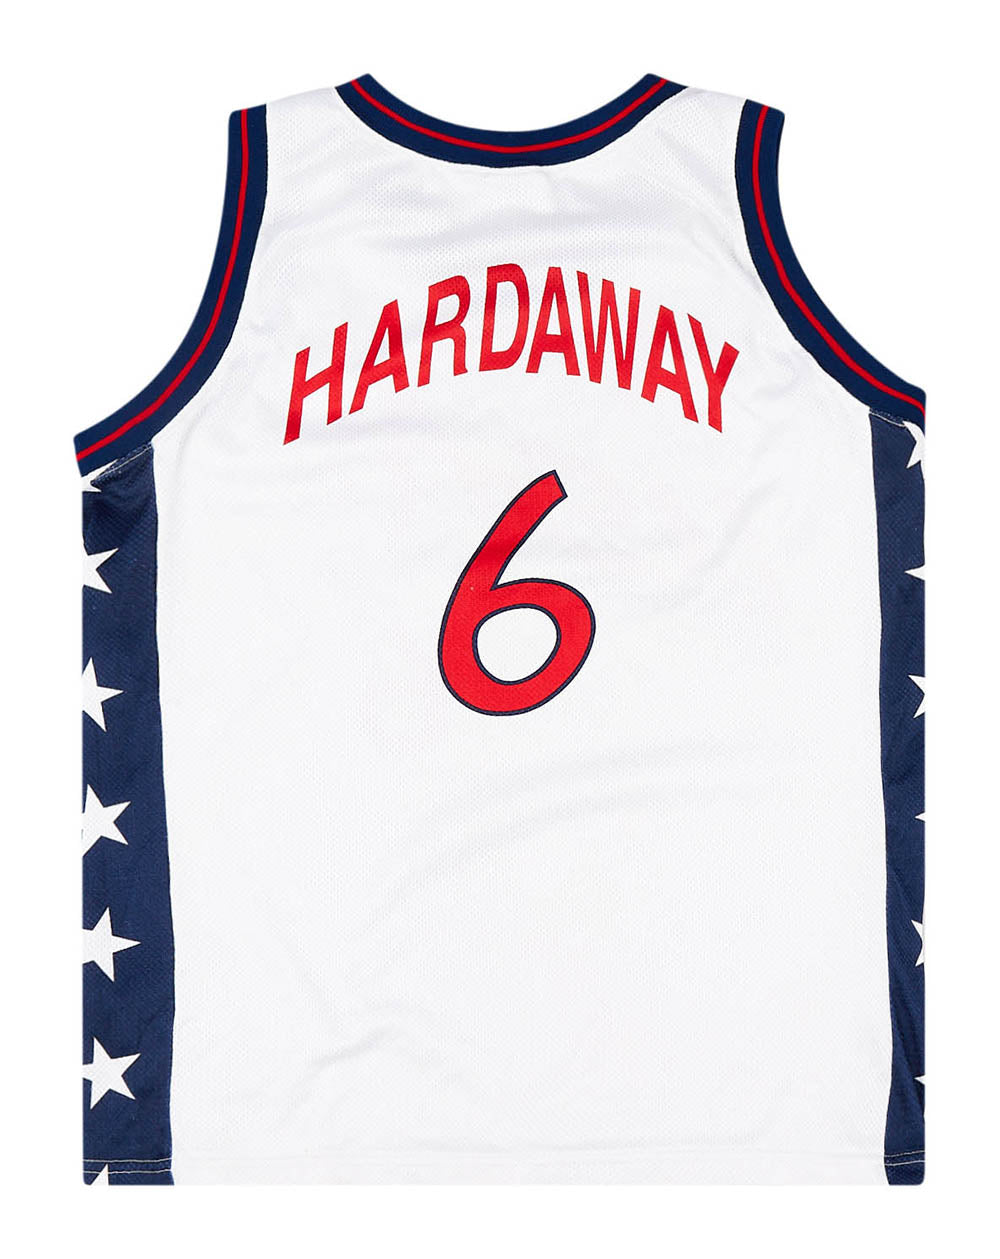 1996-99 USA HARDAWAY #6 CHAMPION JERSEY (HOME) M